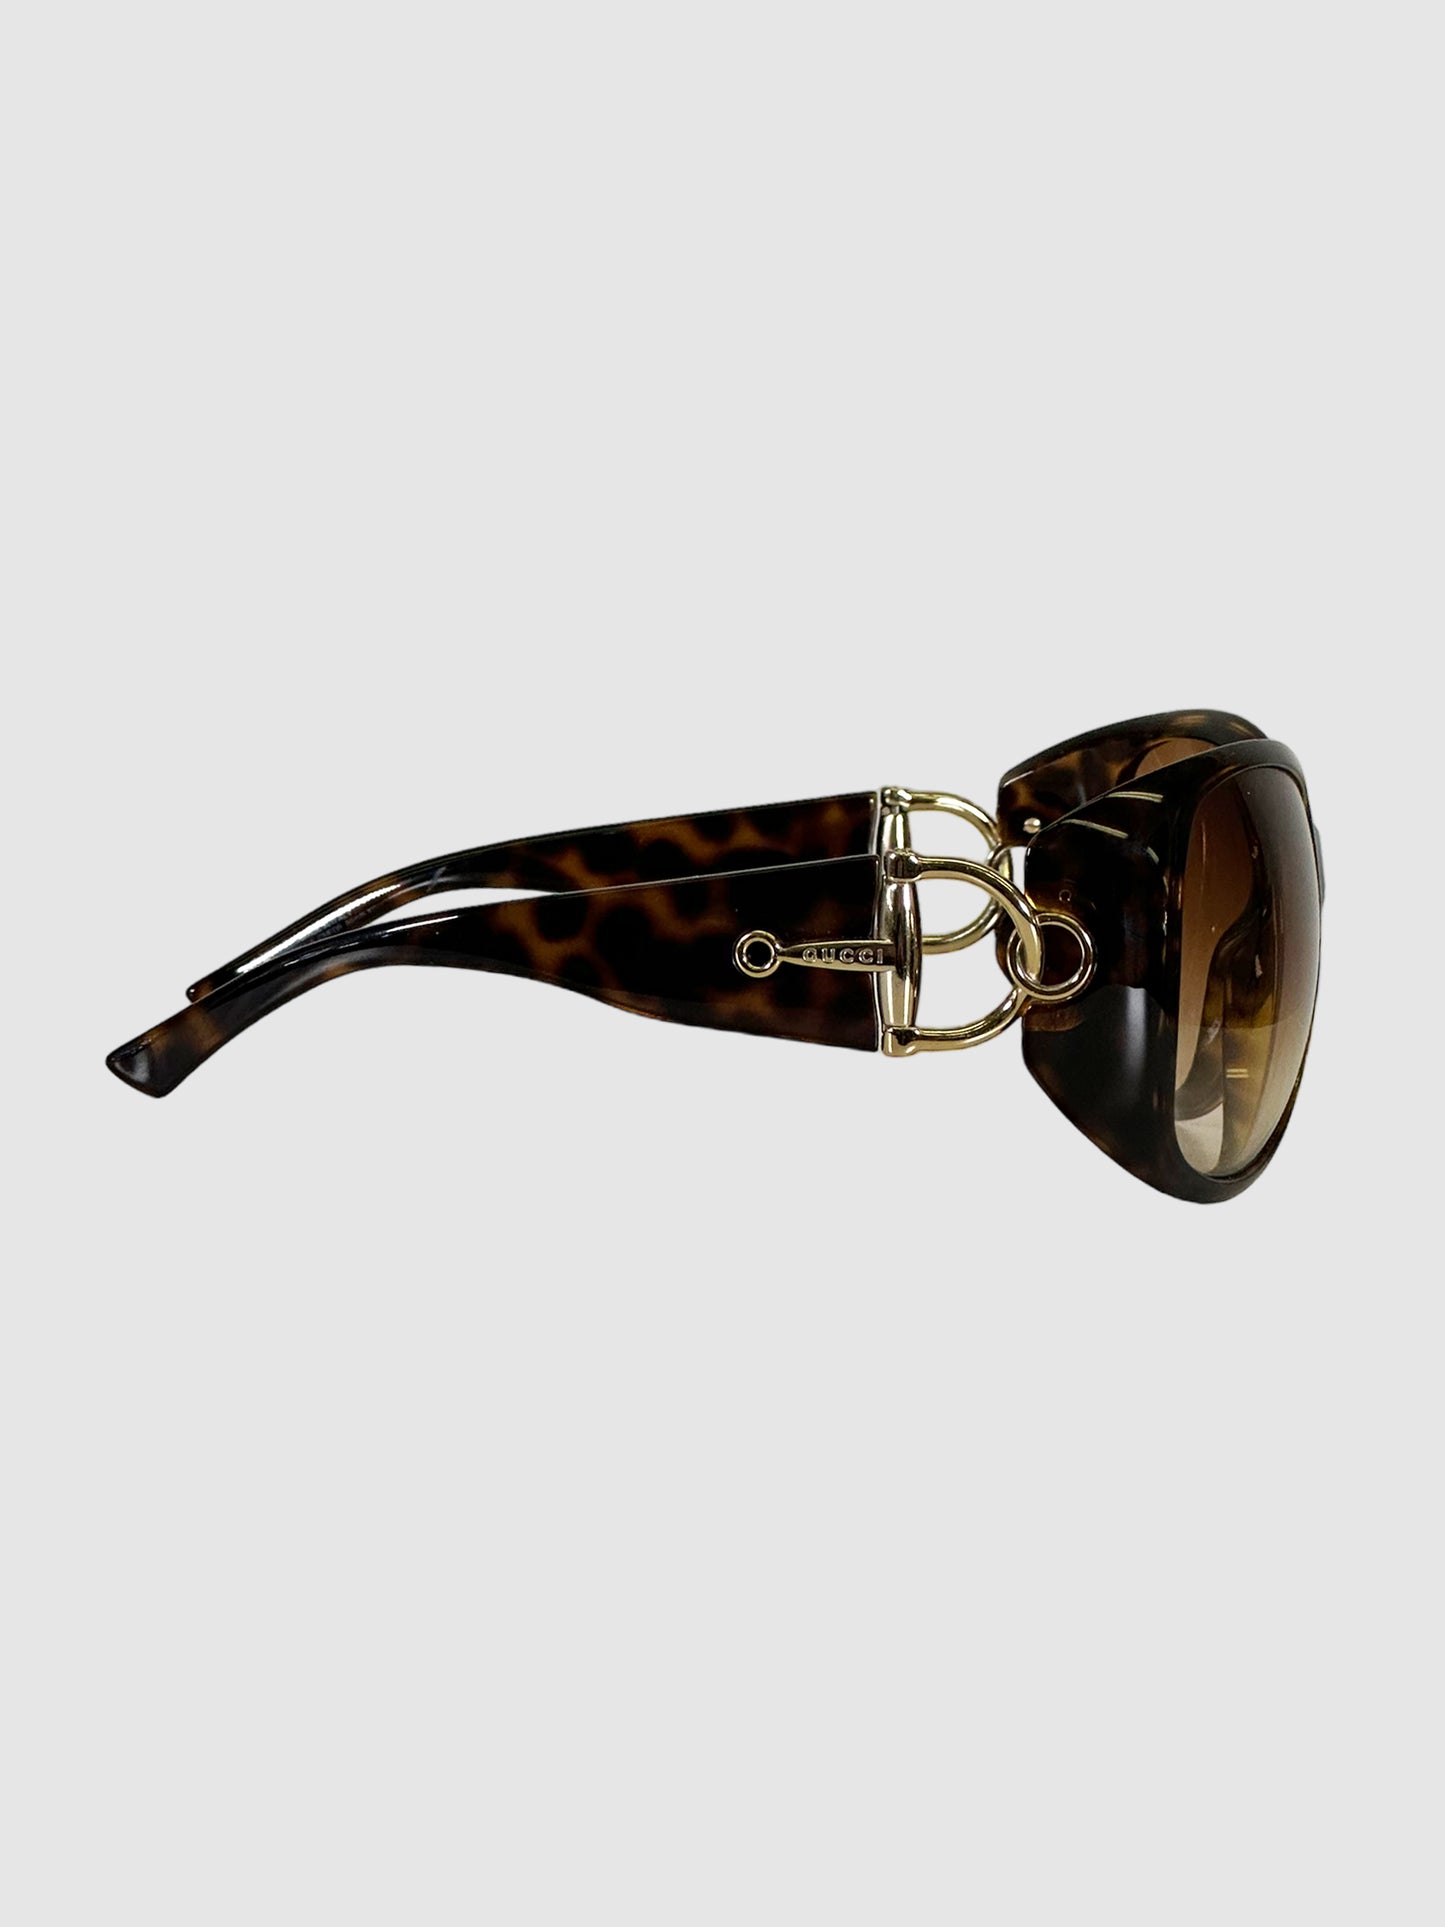 Gucci Horsebit Accent Oversized Sunglasses